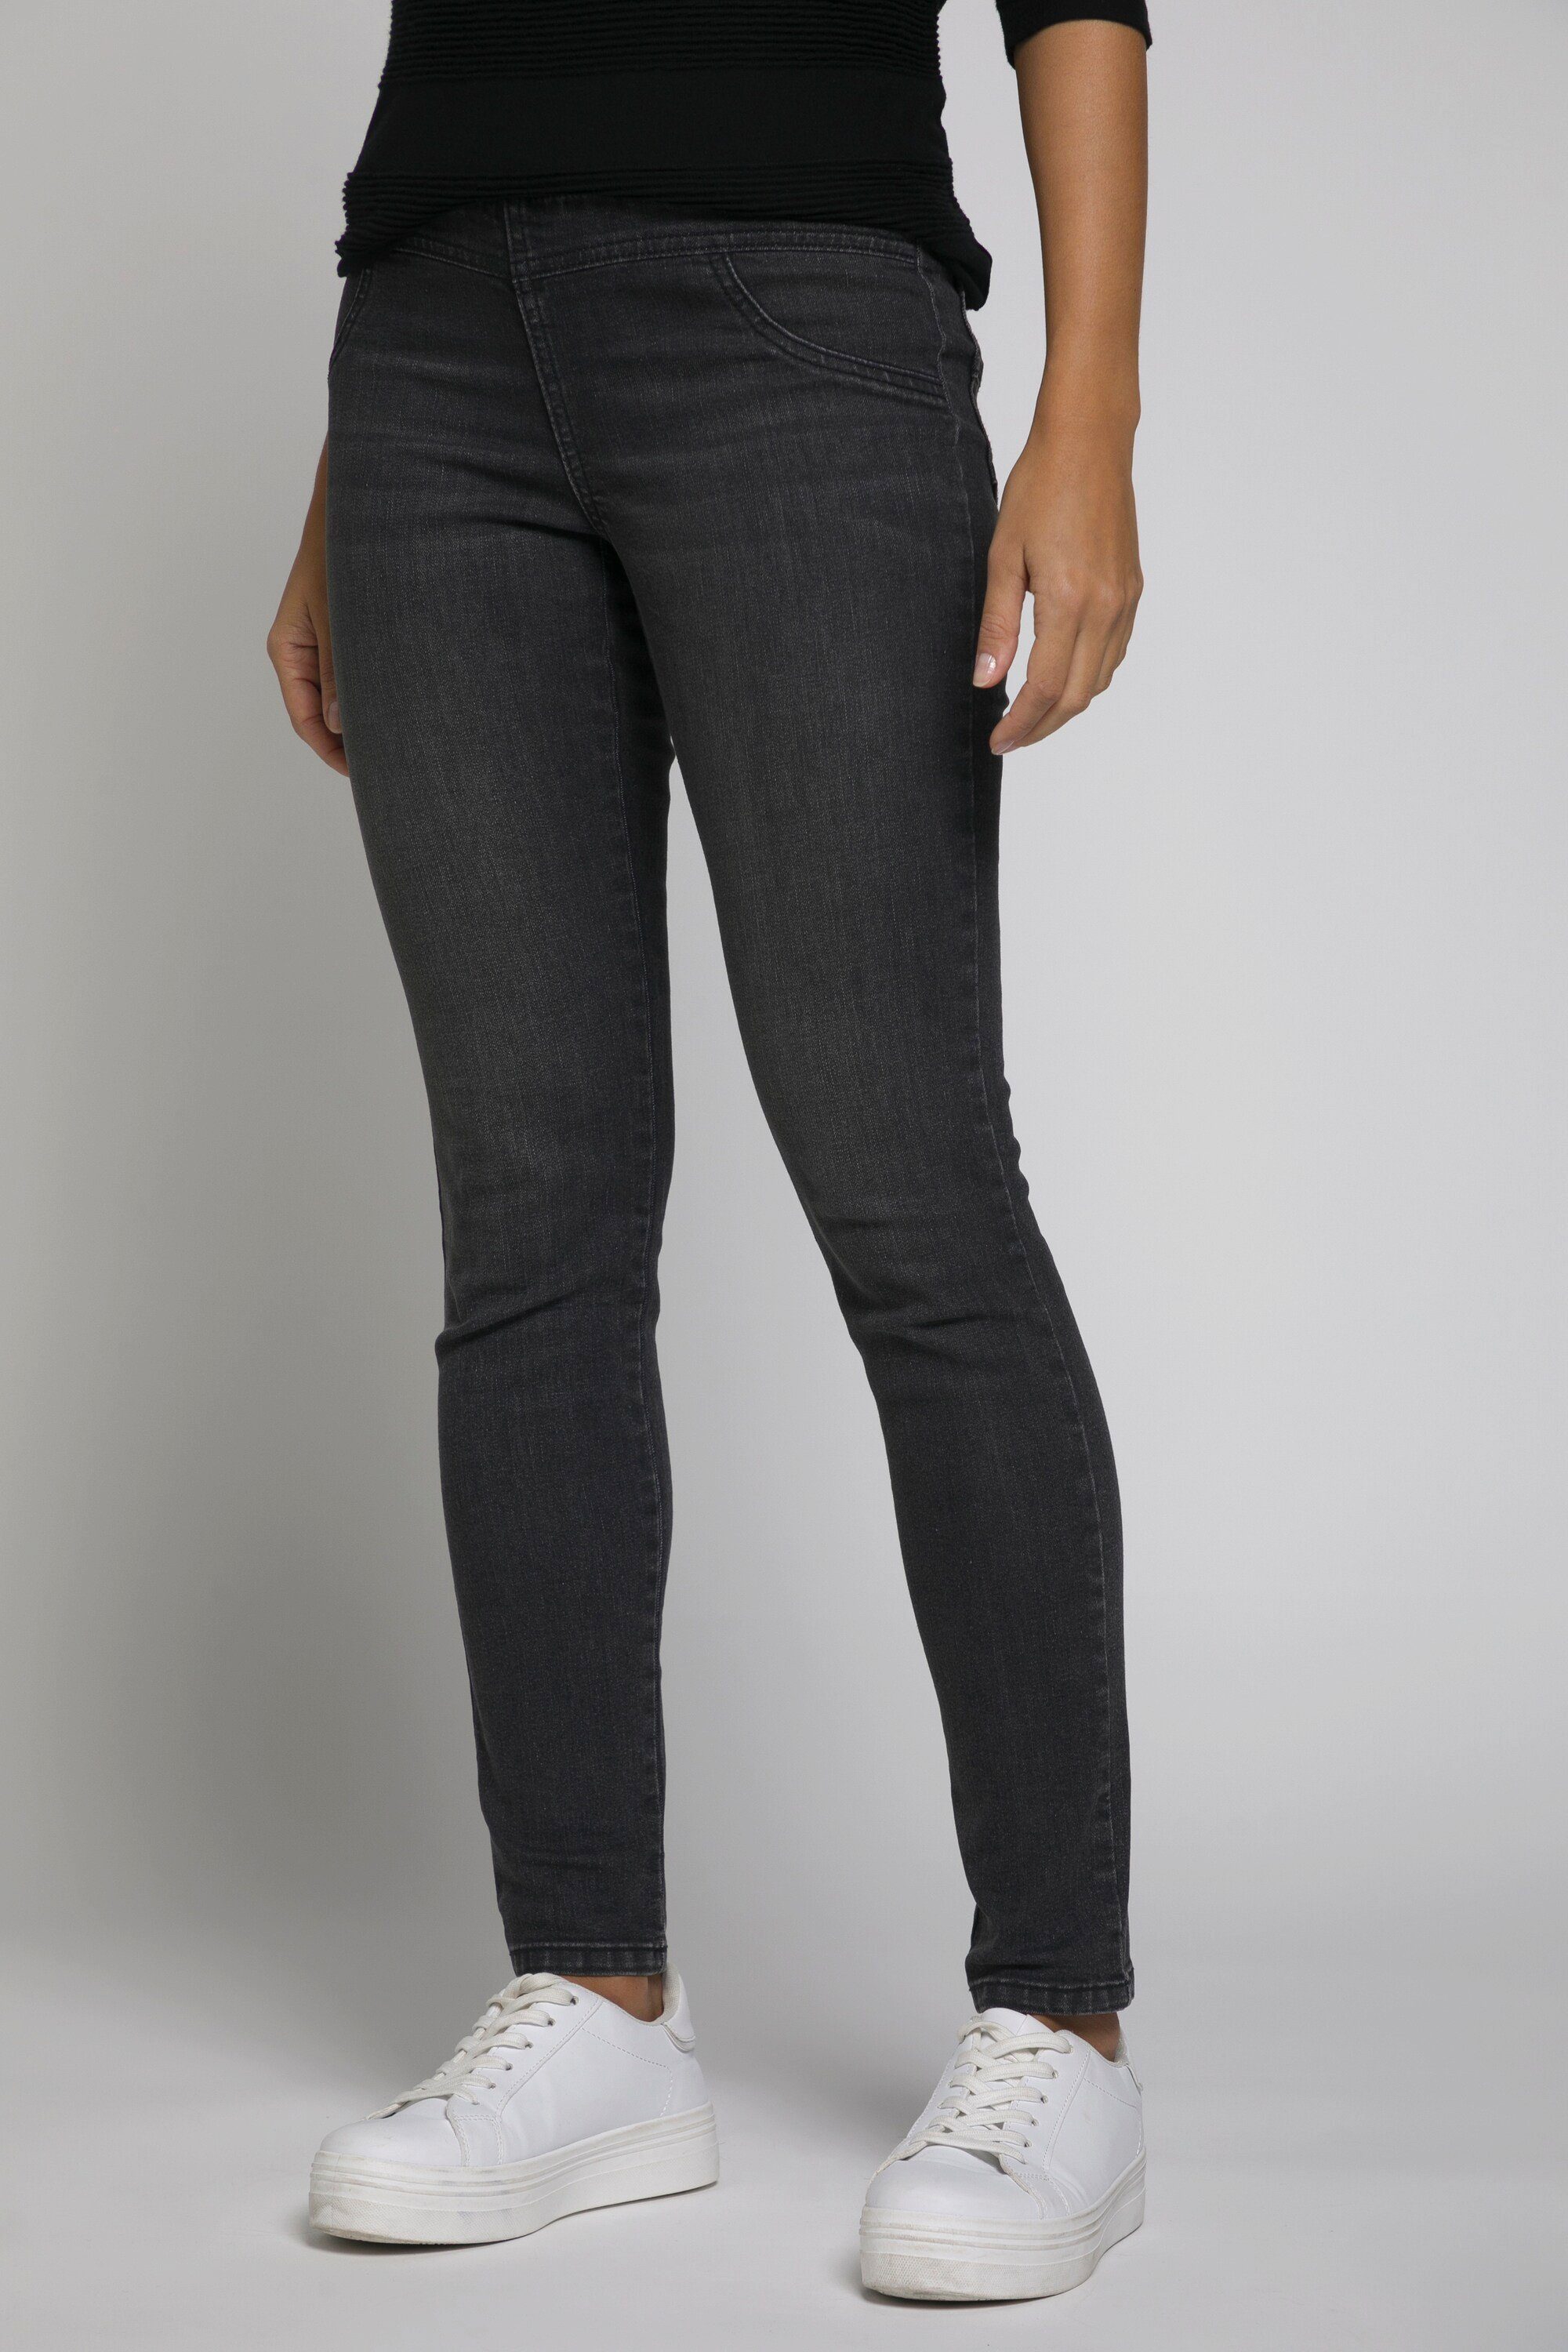 Gina Laura Jeggings Repreve®-Jeans schmale Gesäßtaschen Form Julia denim 2 grey